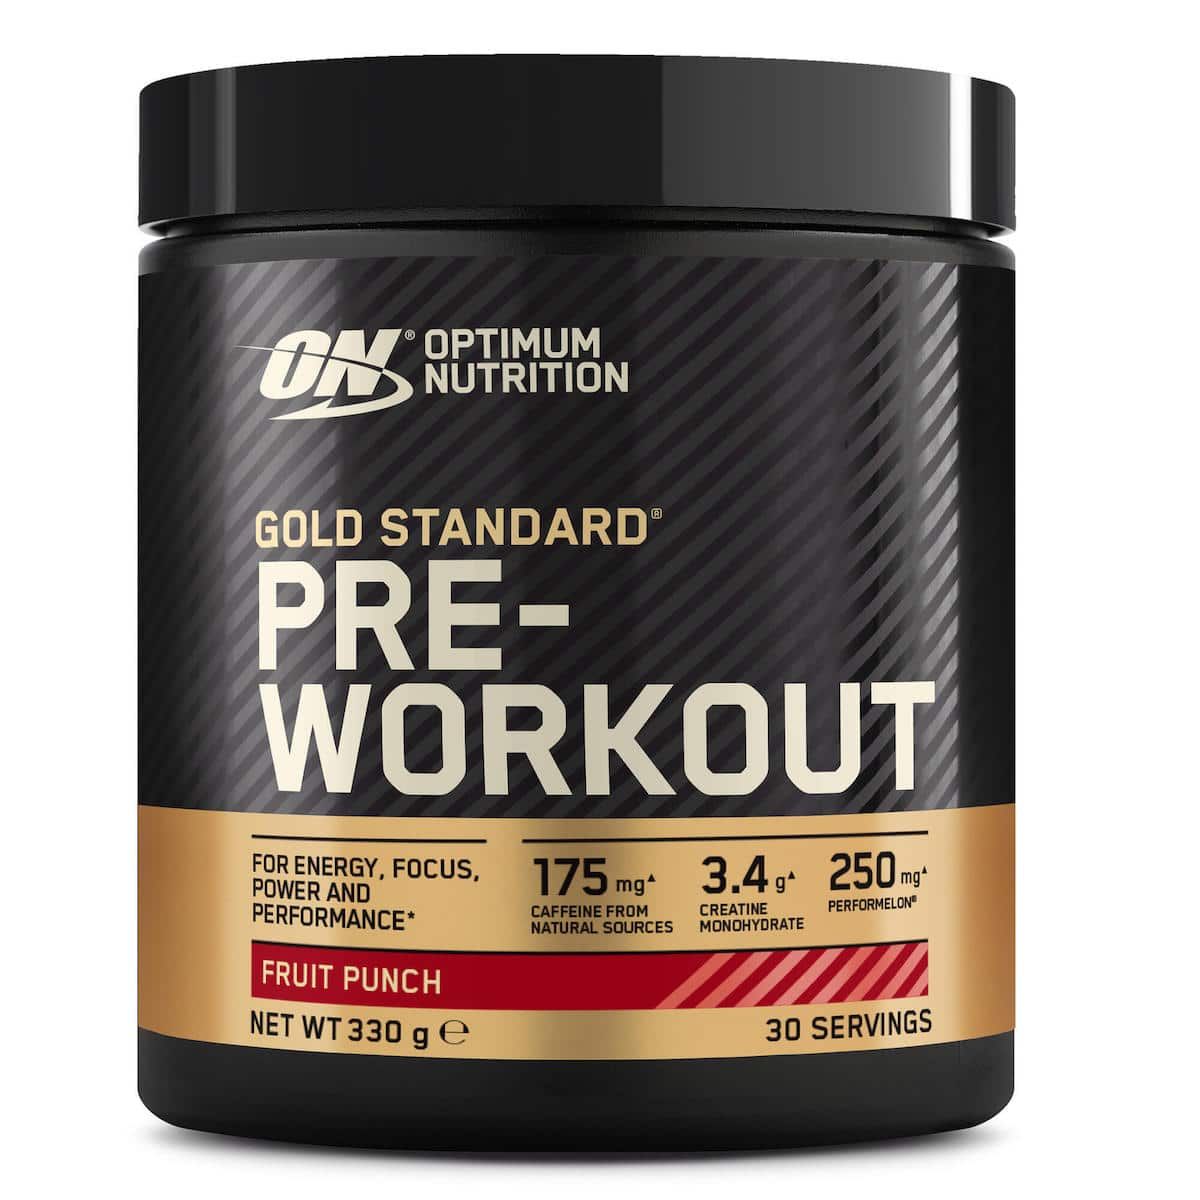 Gelb Standard Pre-Workout Optimum Nutrition